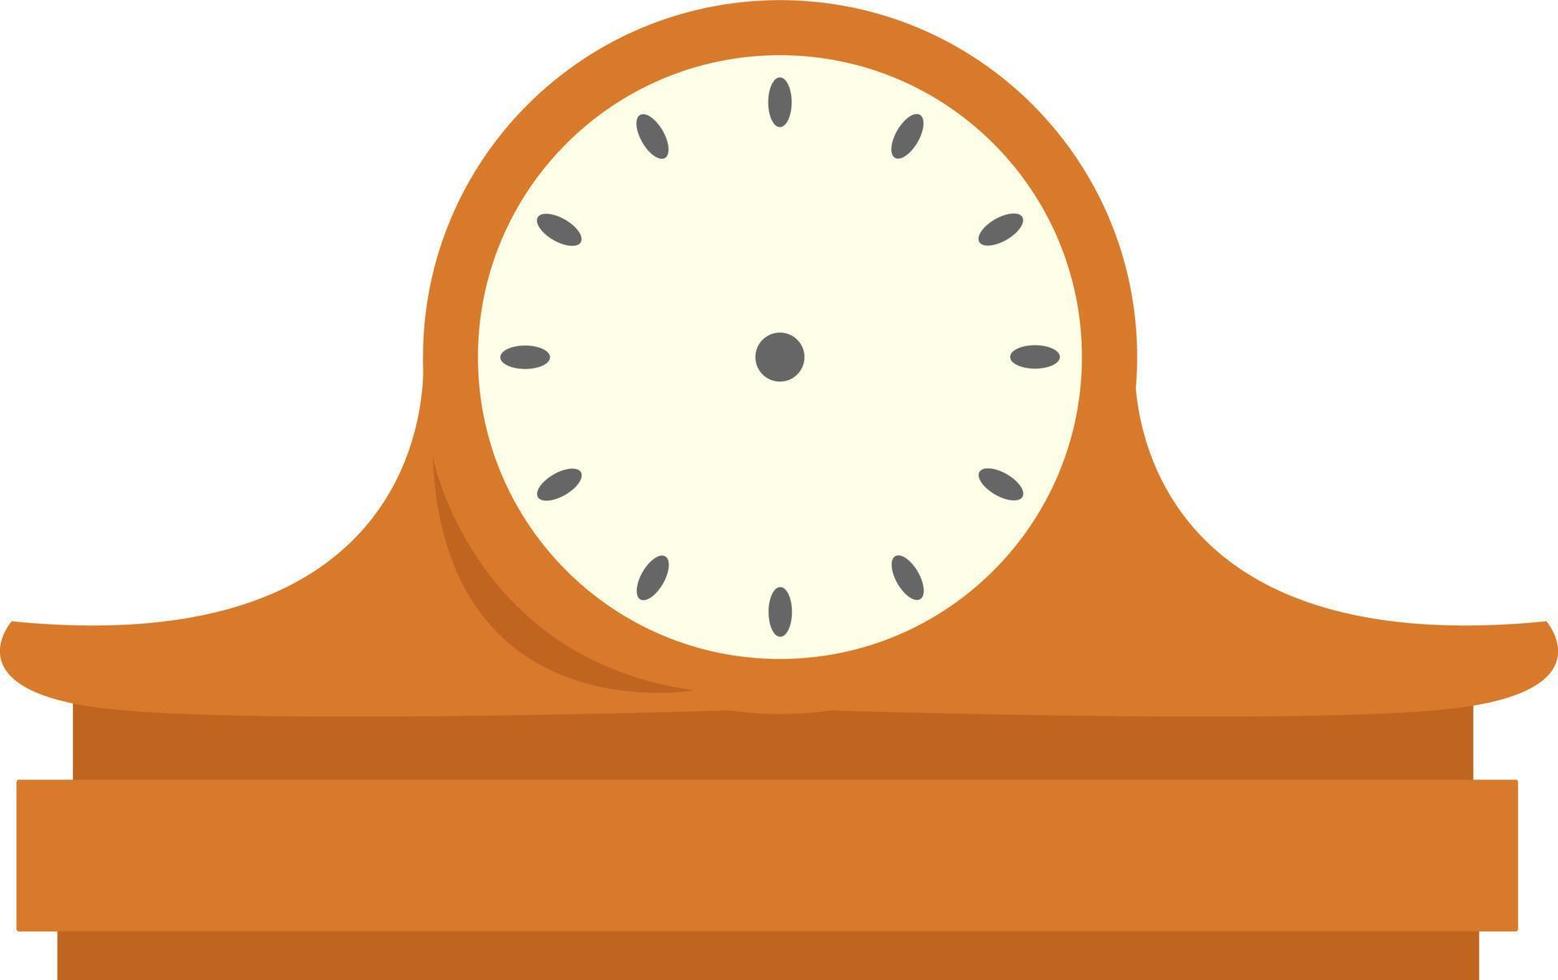 Retro clock, illustration, vector on white background.